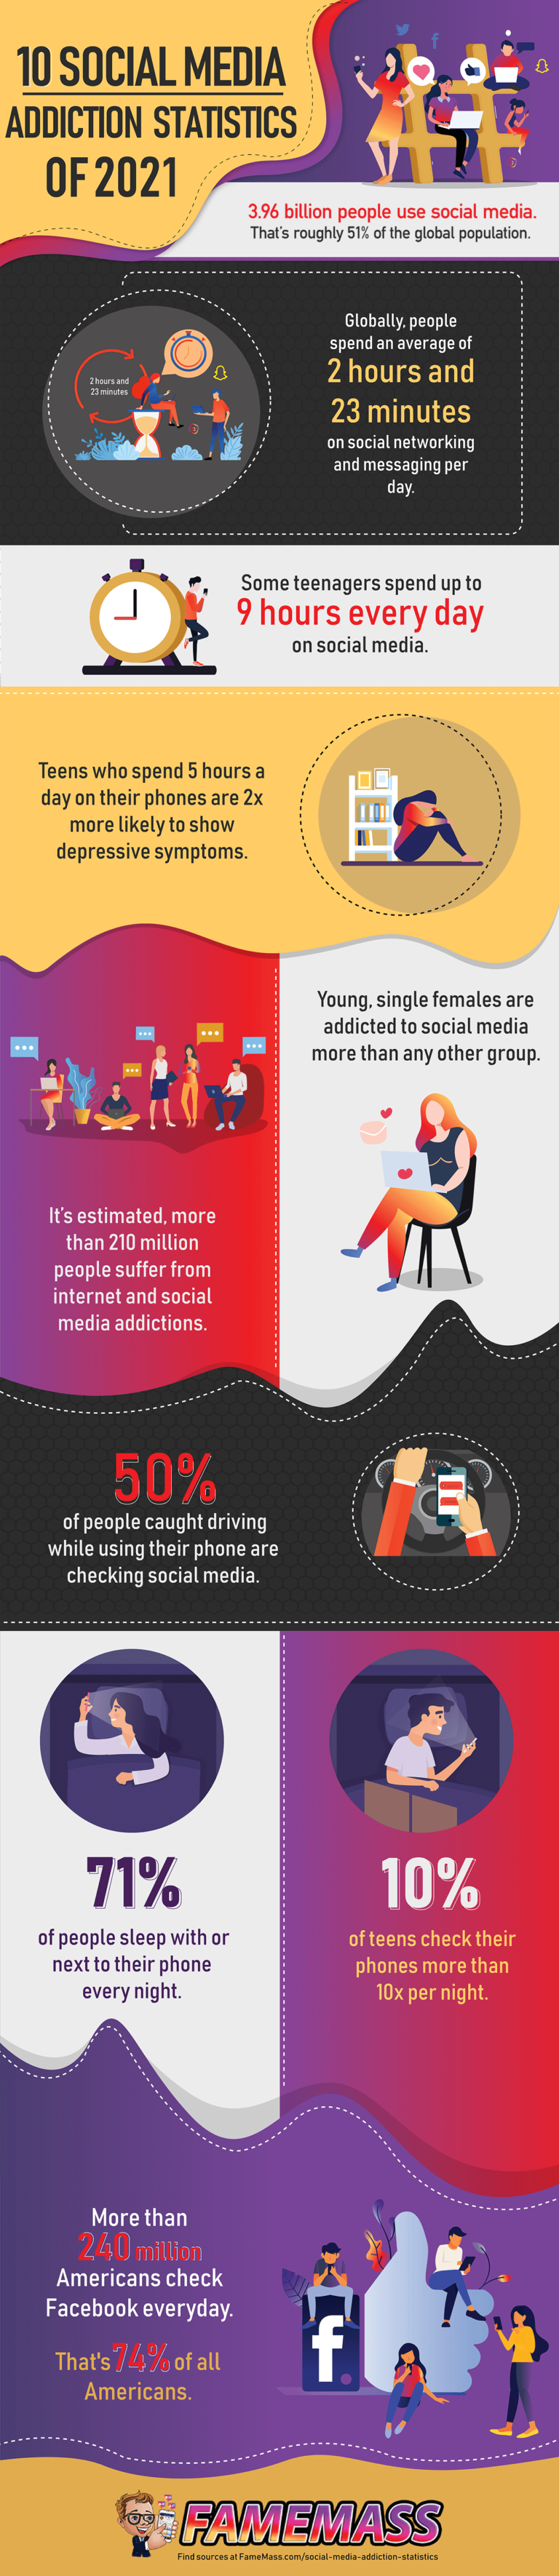 social media addiction research articles